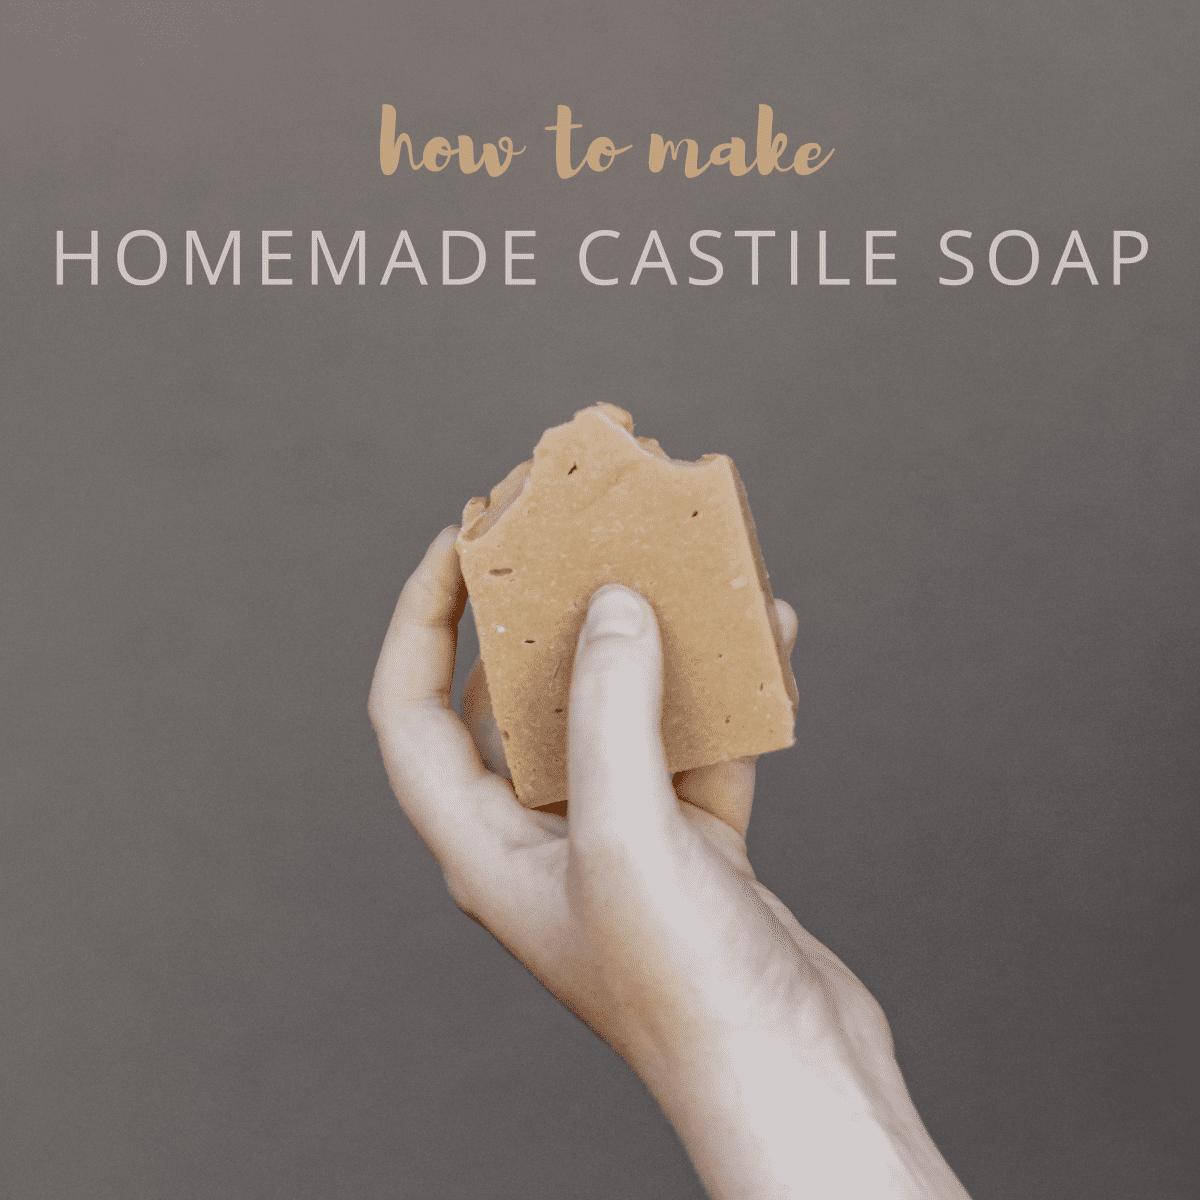 Hot Process Castile Soap Recipe for Bars or Liquid - FeltMagnet